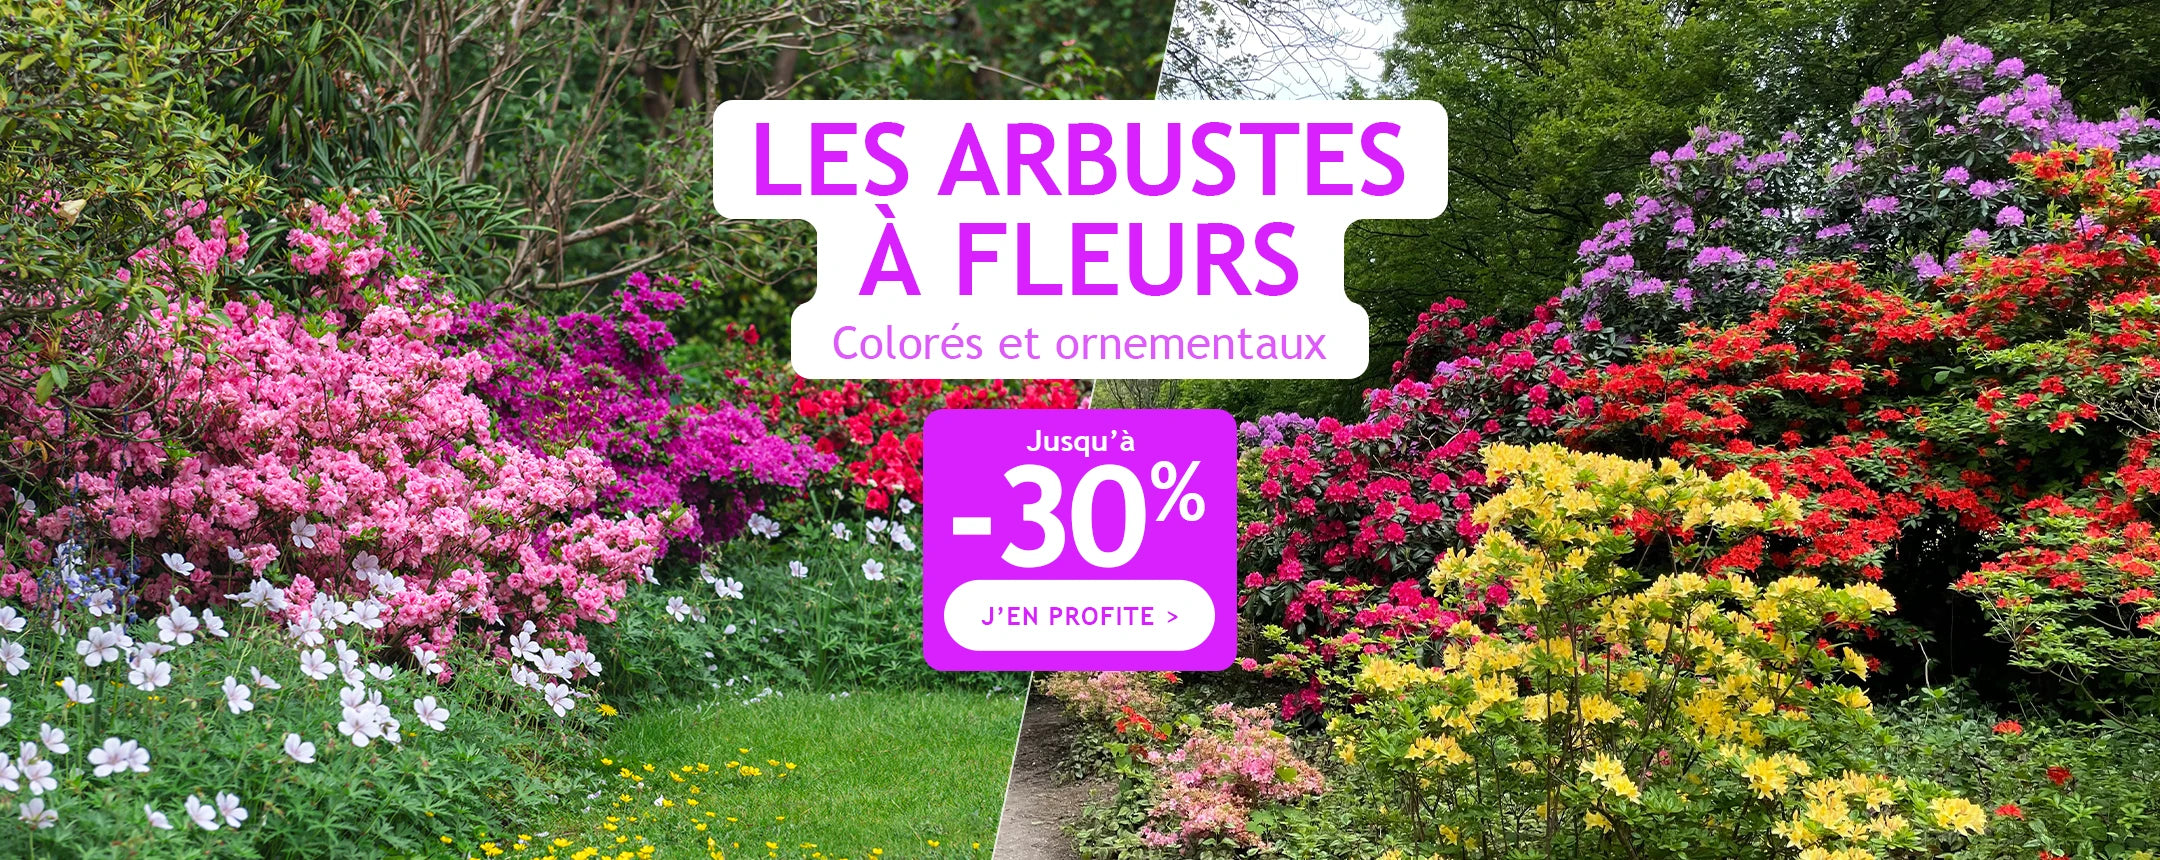 Les arbustes à fleurs jusqu'à -30% !